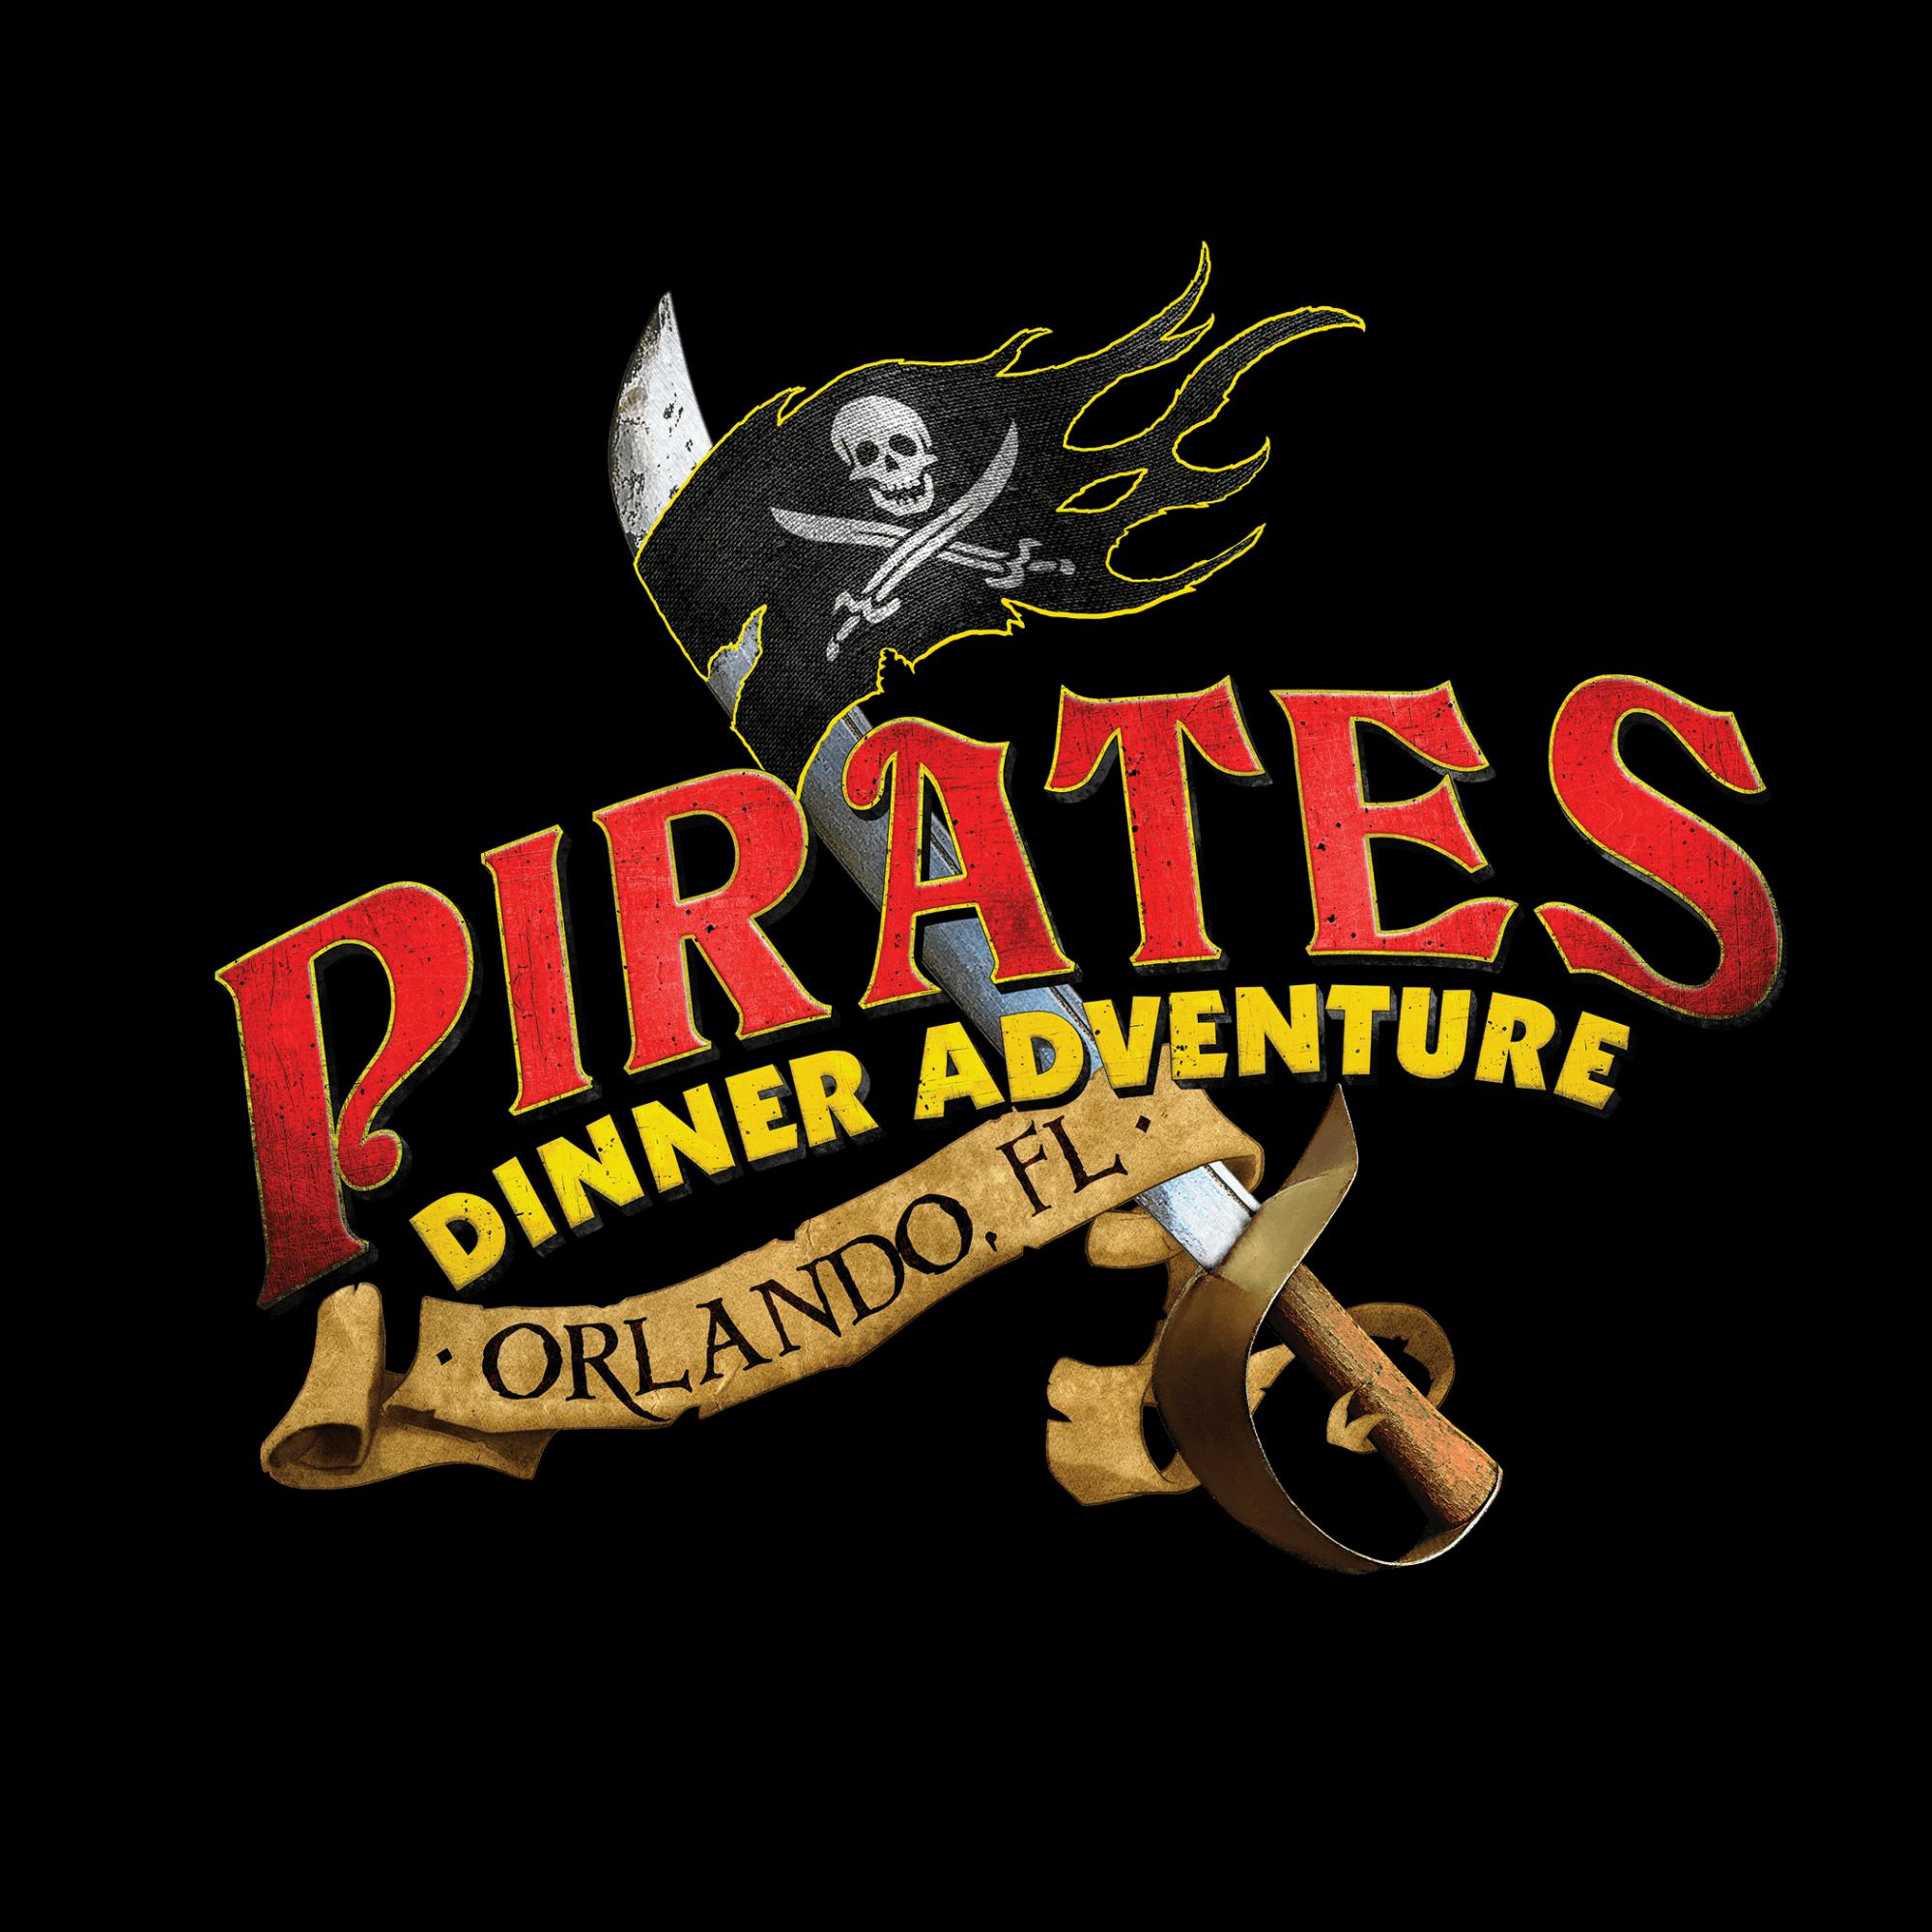 Treasure level tickets for Pirates Dinner Adventure in Orlando